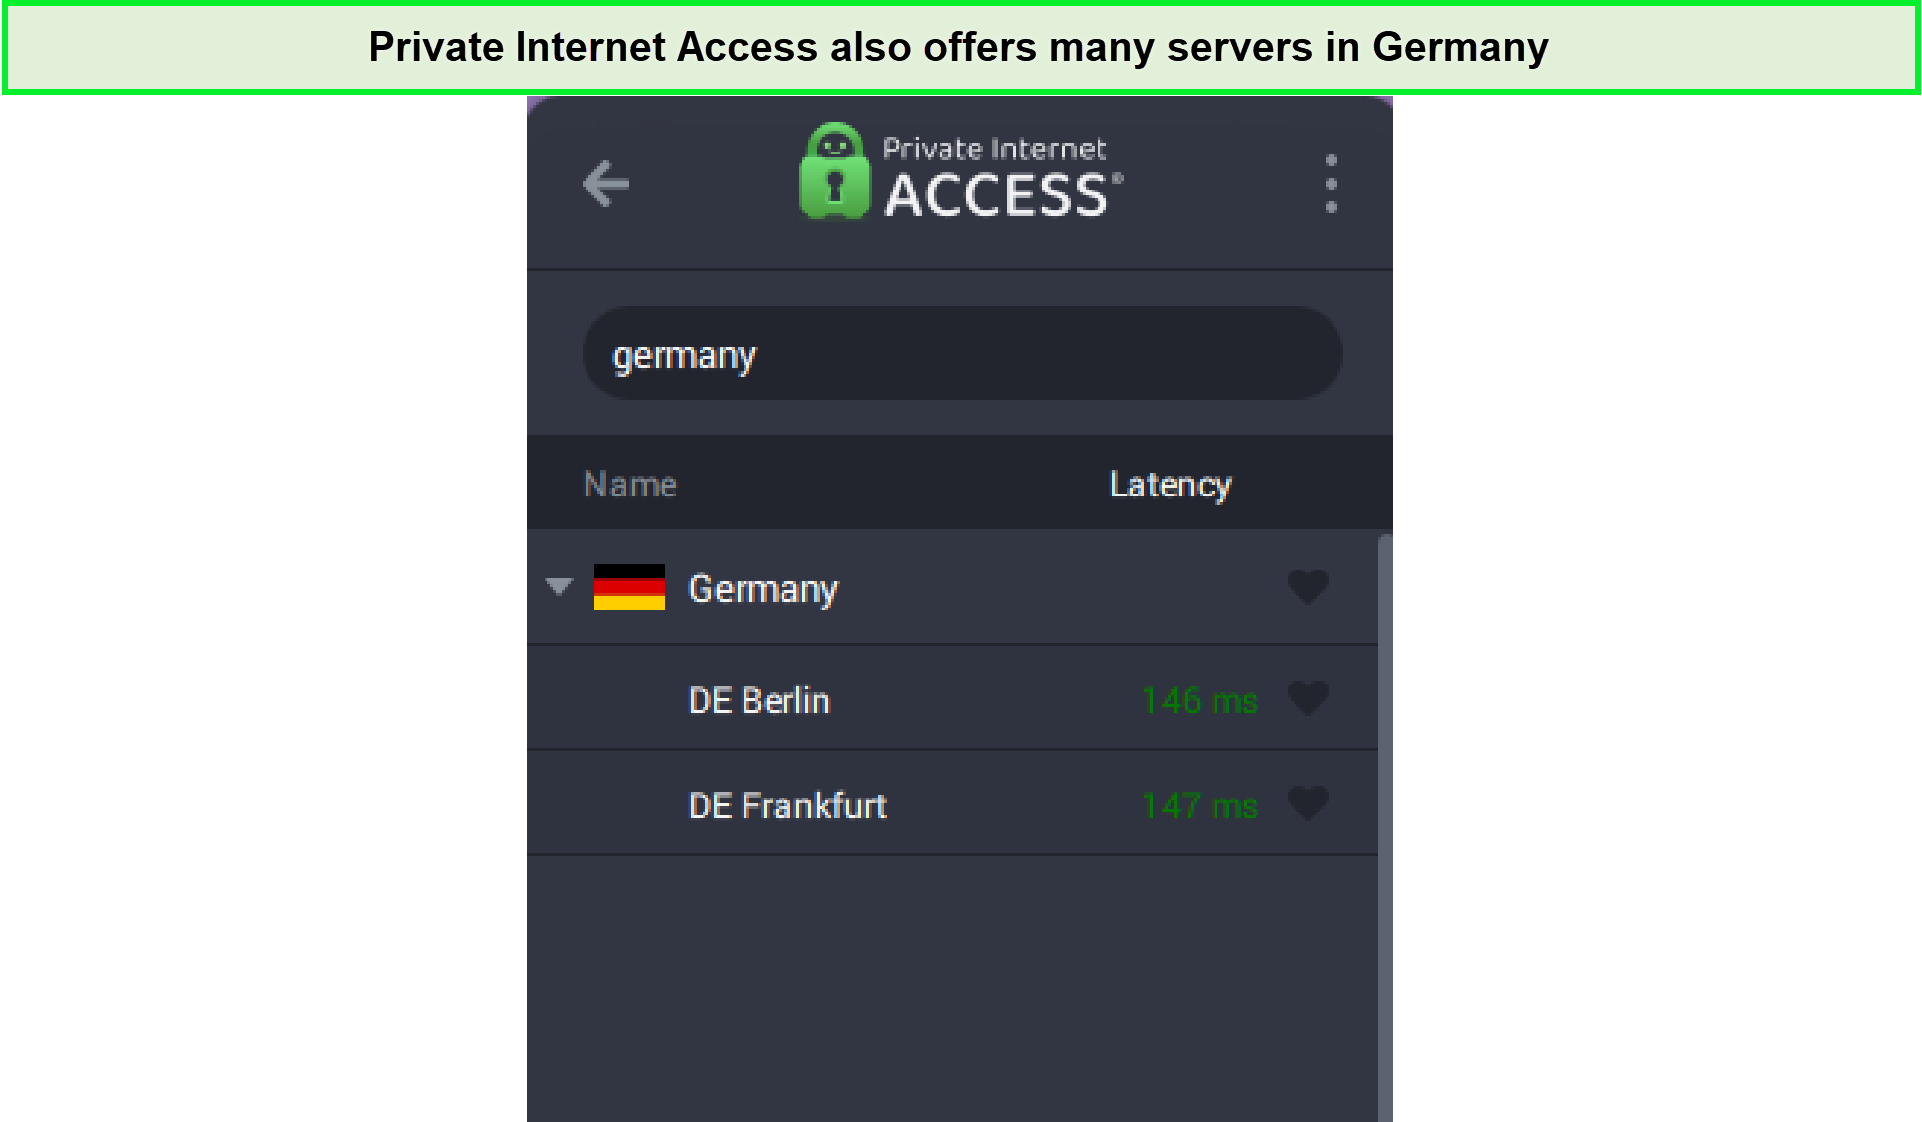 pia-german-servers-